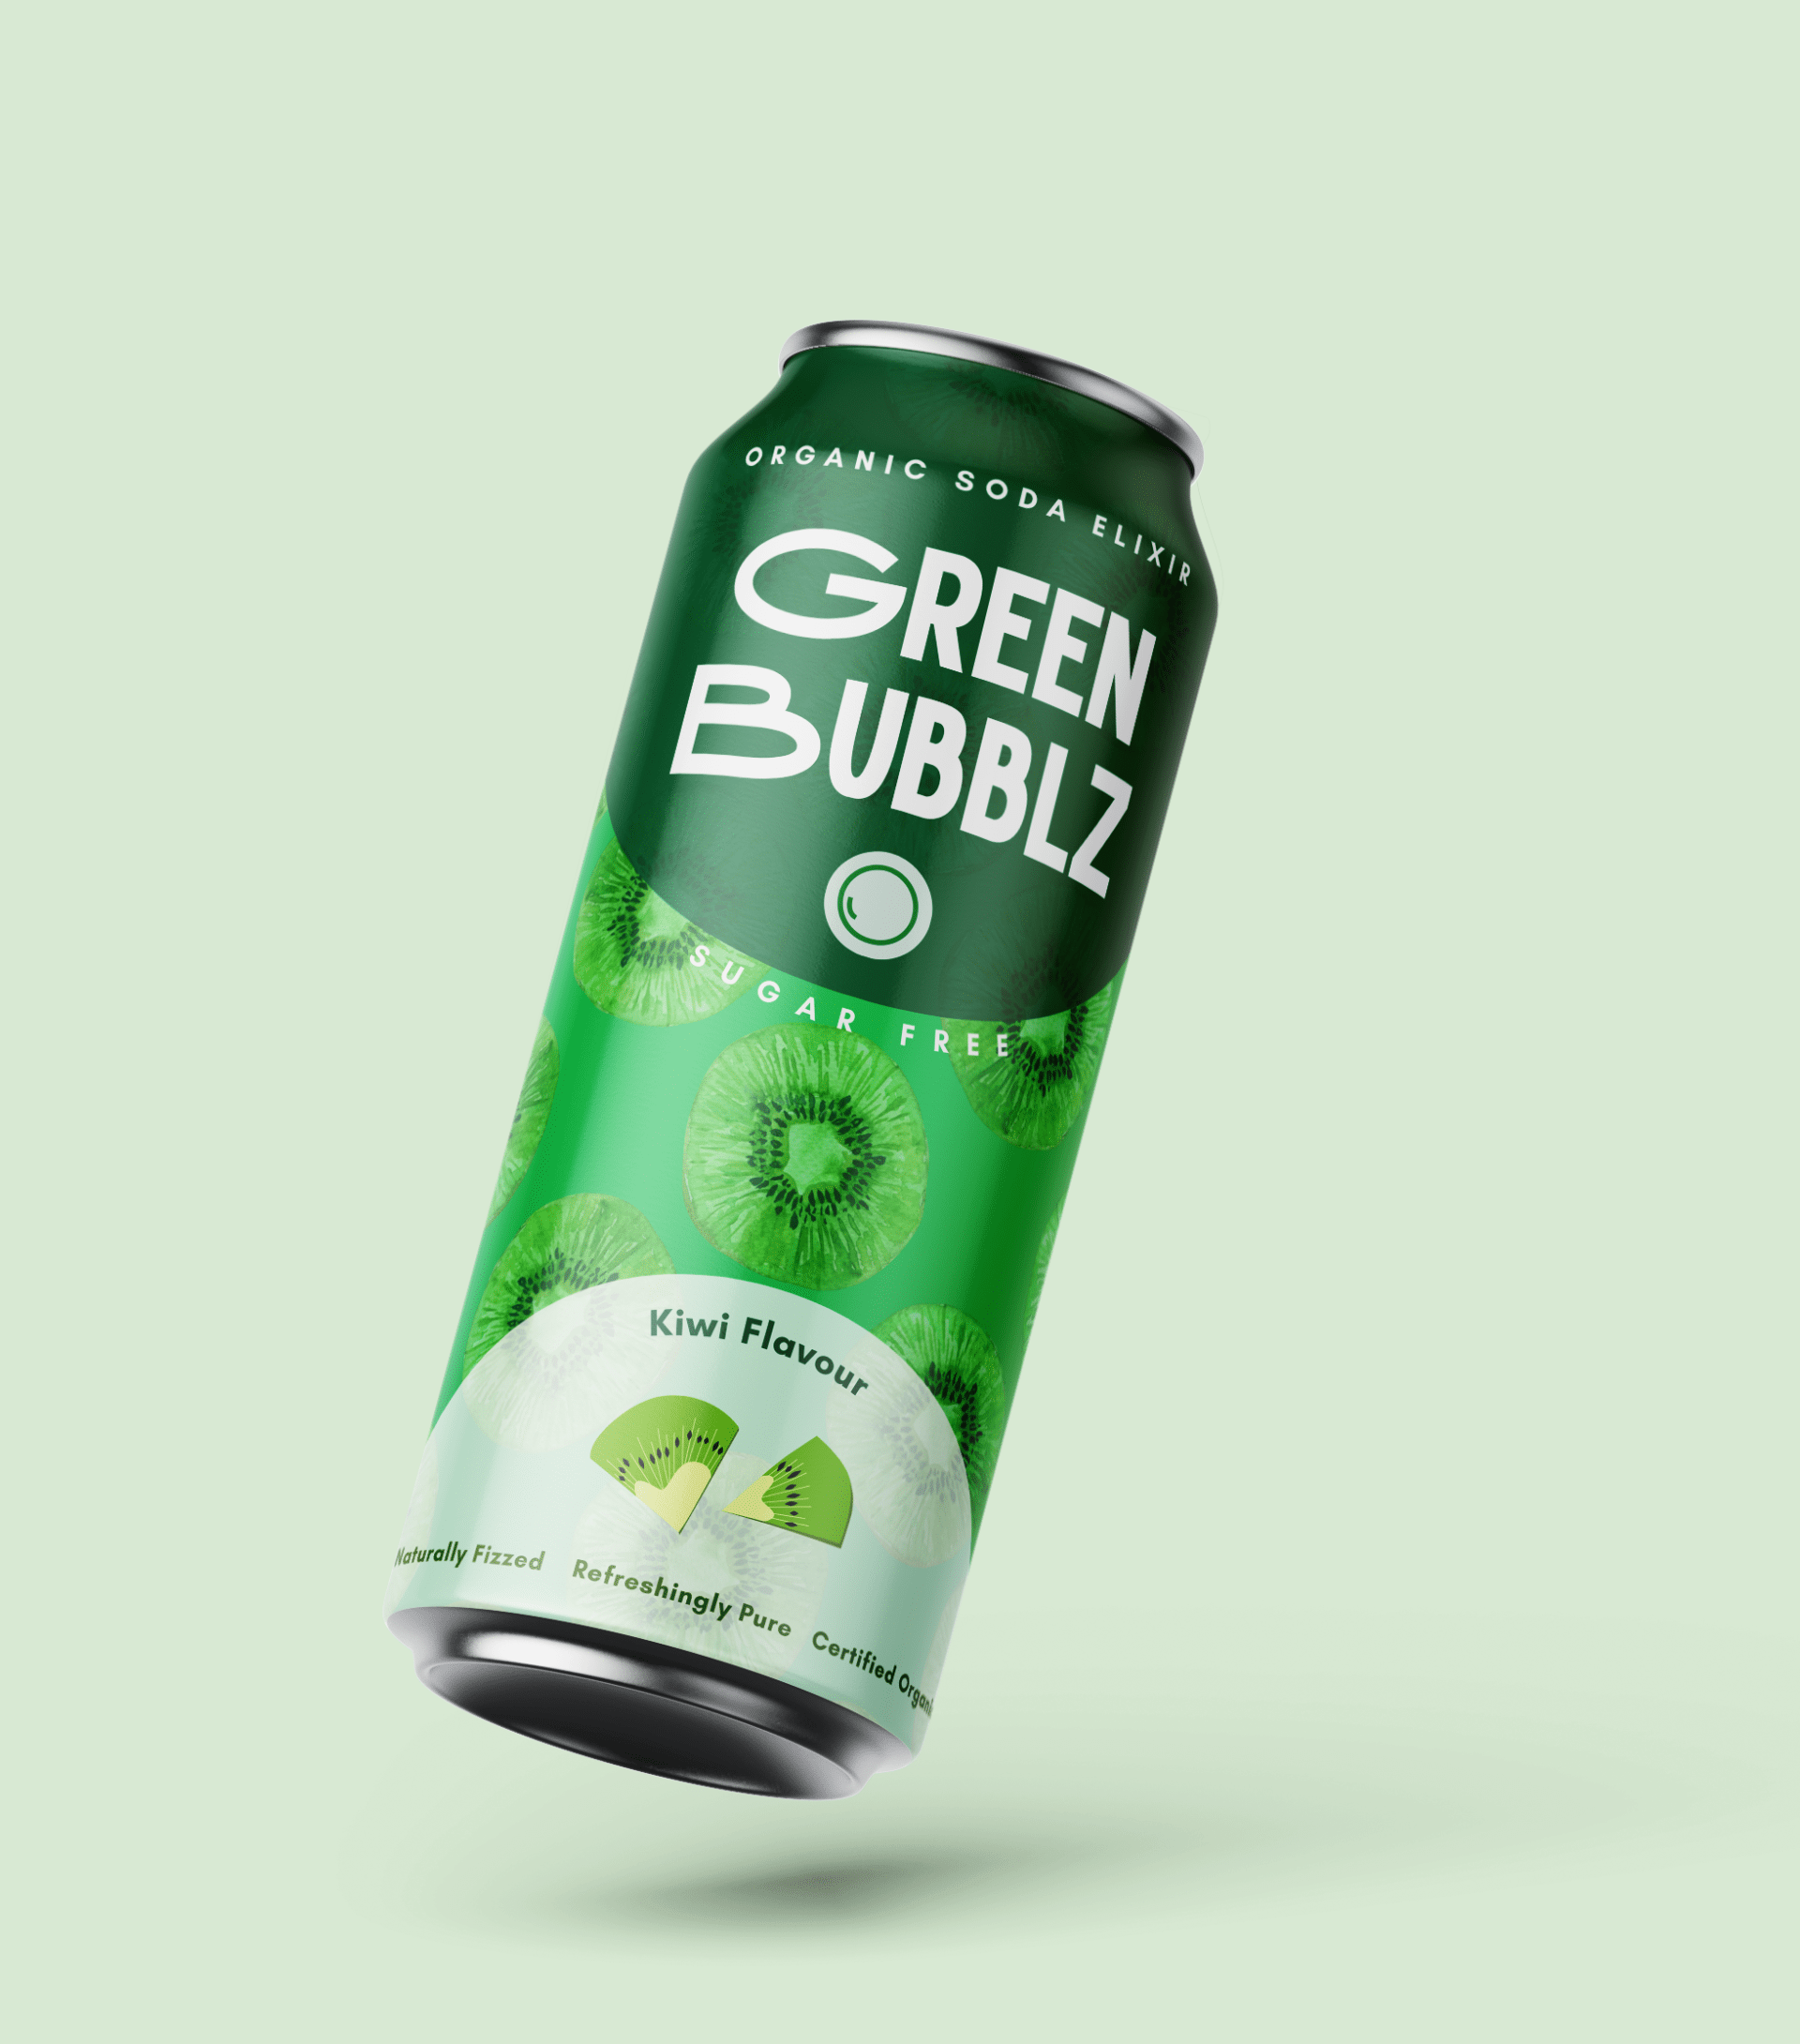 Green Bubblz food packaging design